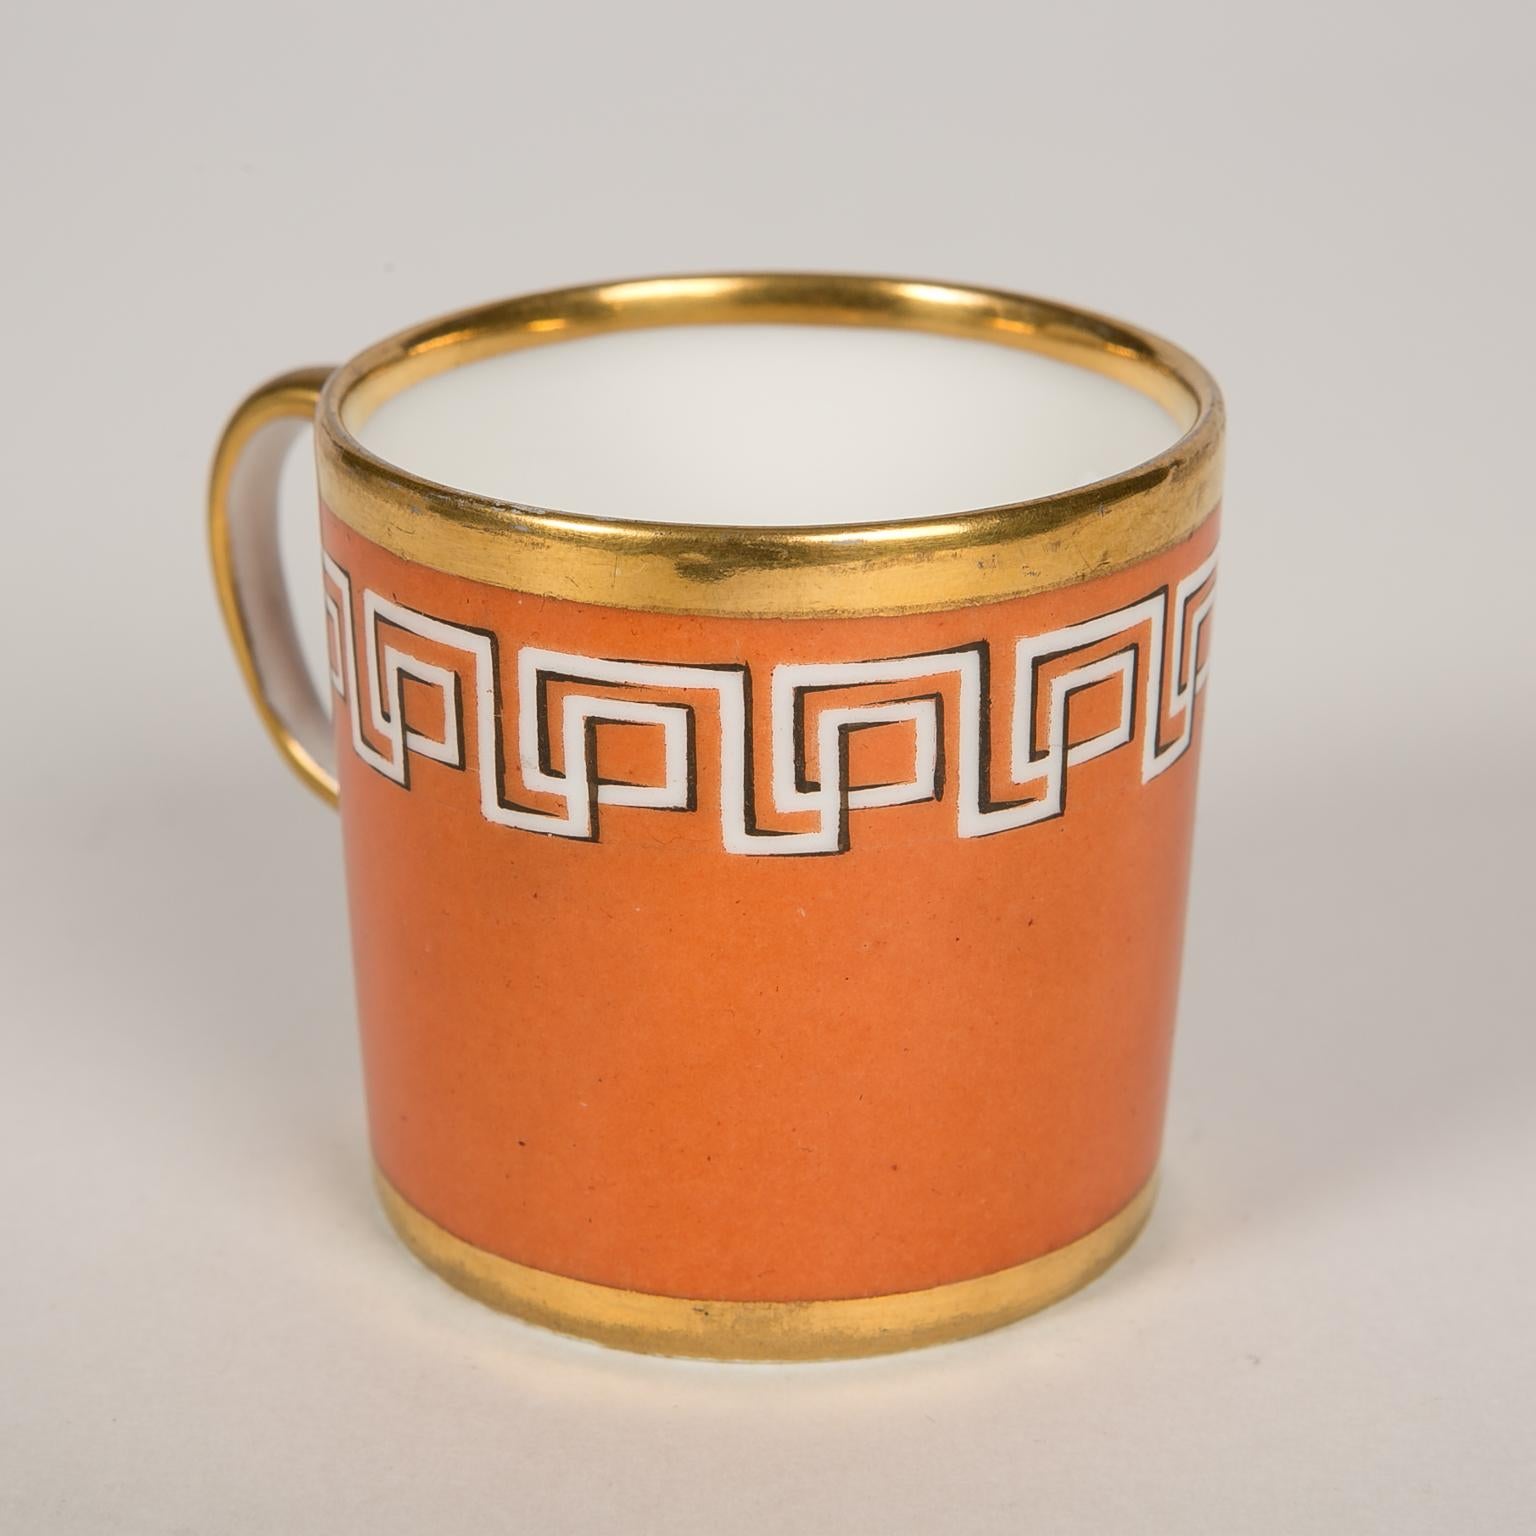 English Antique Orange Cup and Saucer with Greek Key Gilt Design, England circa 1820